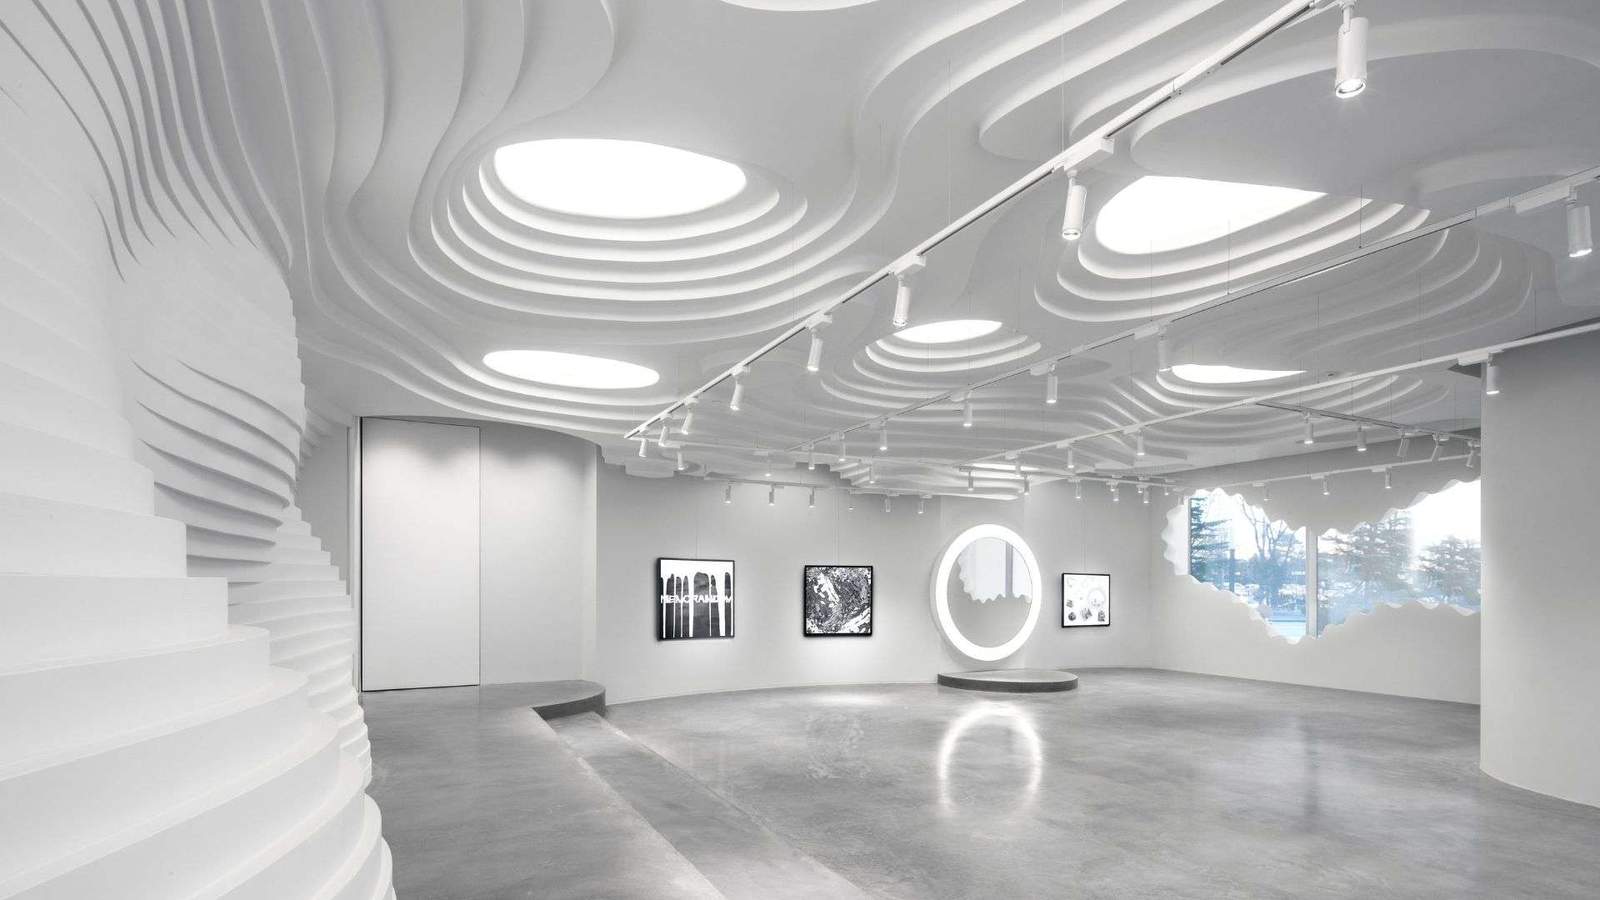 123 Architects designs futuristic ‘White Cave’ retail space